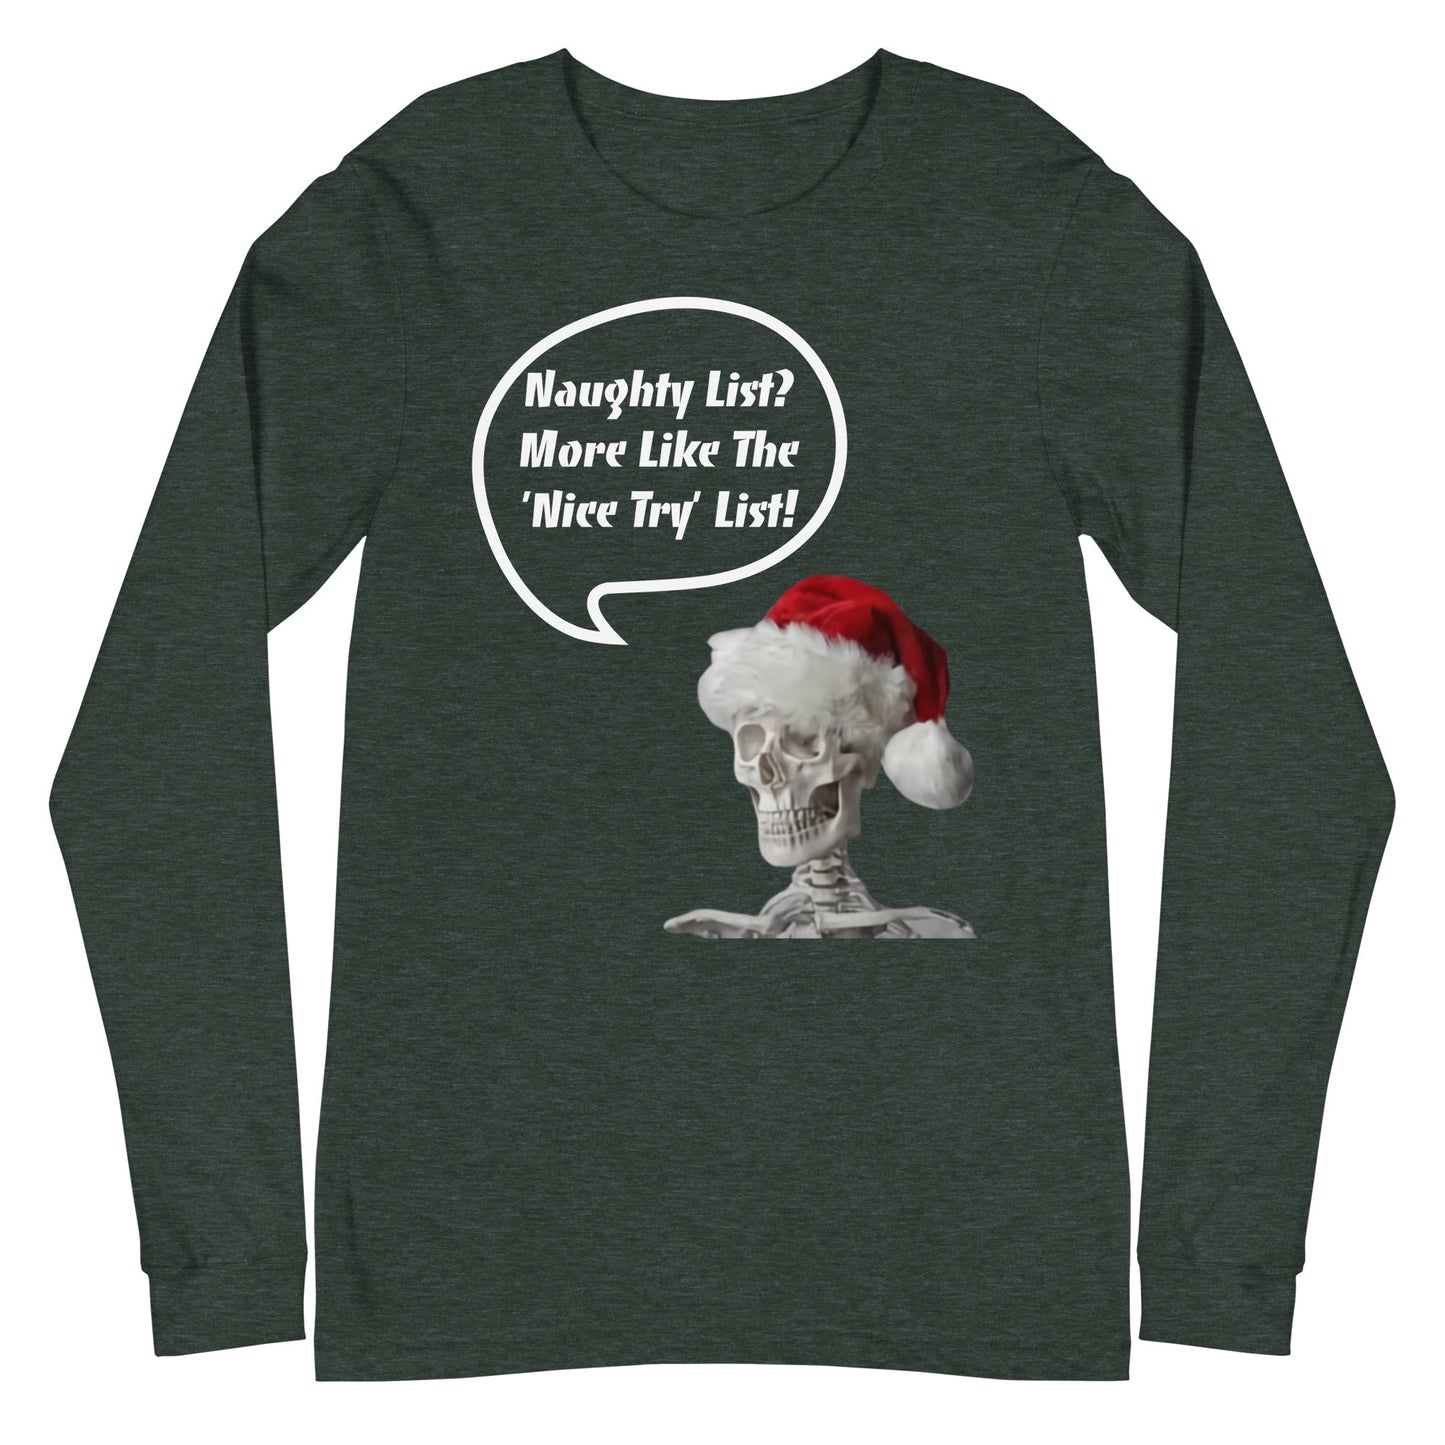 Naughty List? Unisex Long Sleeve Tee / Christmas Holiday Funny T-shirt - Lizard Vigilante